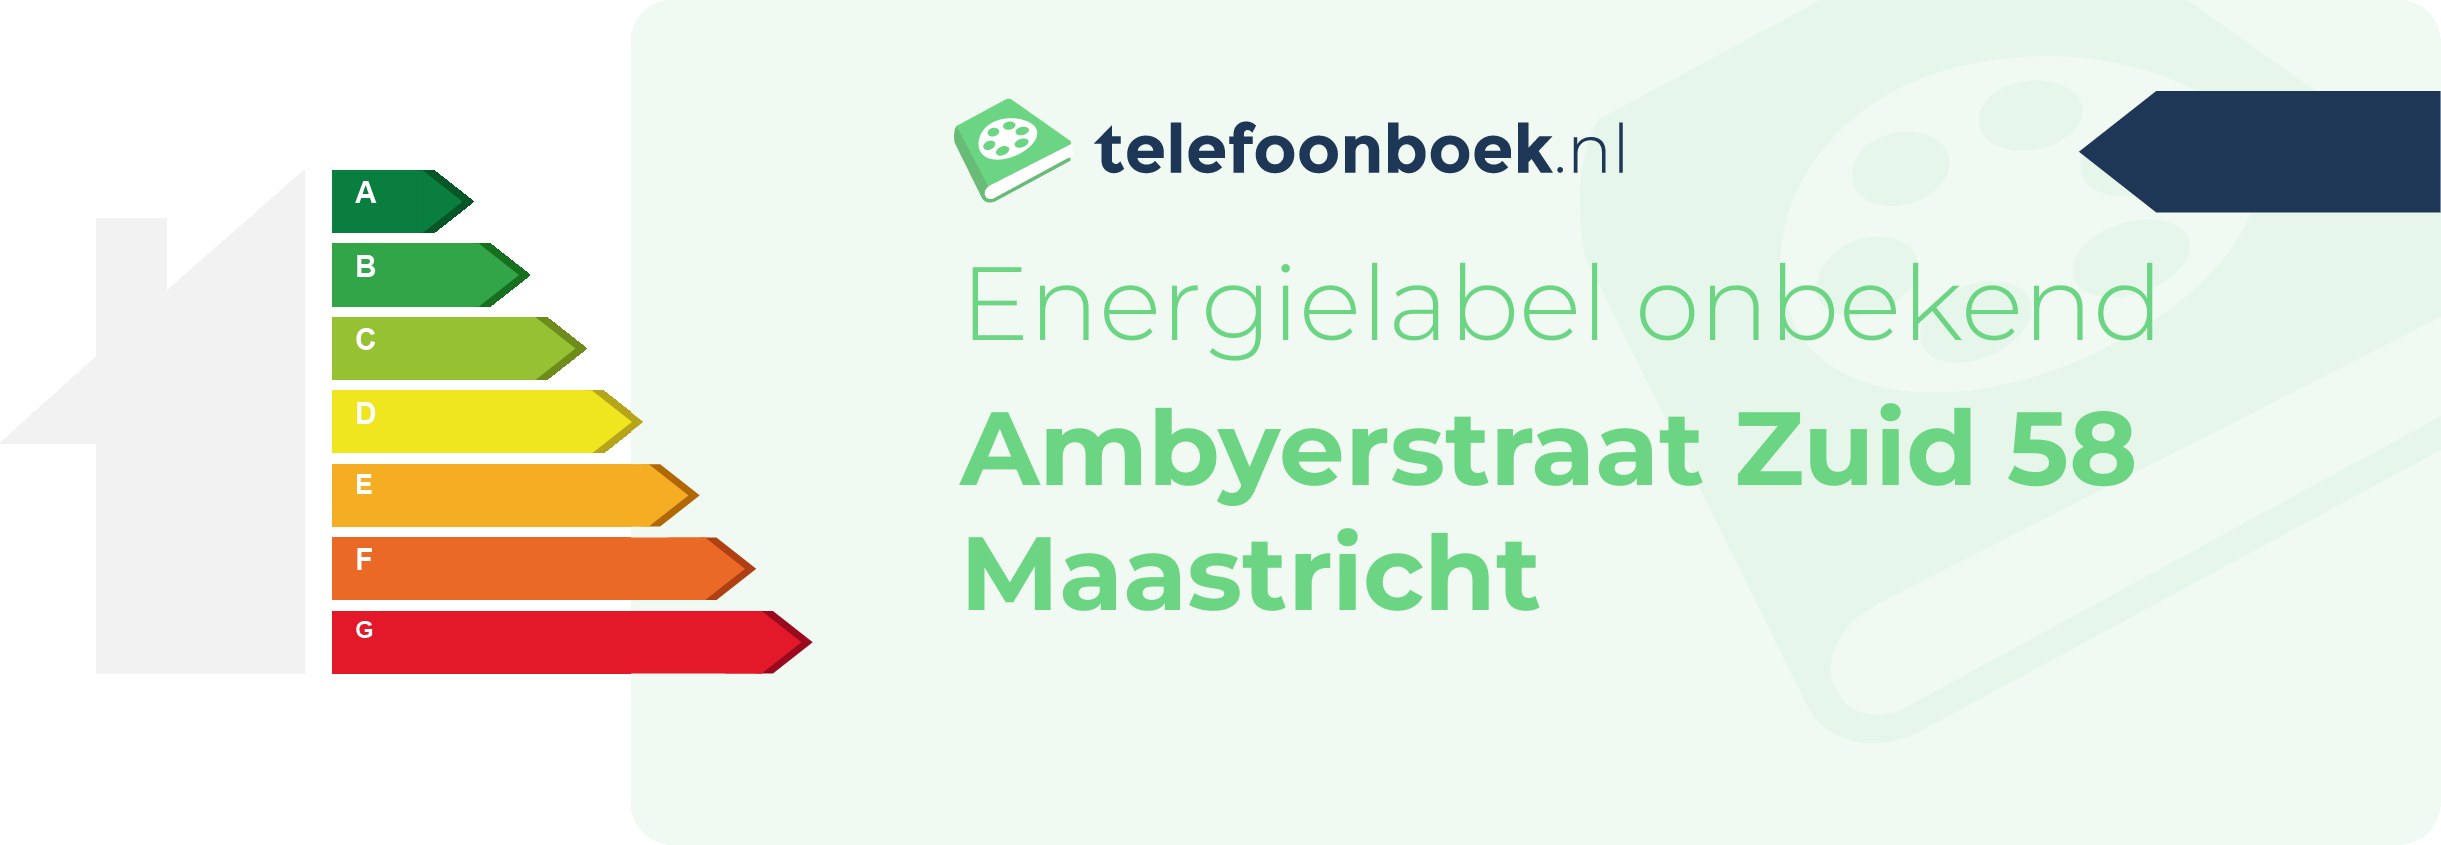 Energielabel Ambyerstraat Zuid 58 Maastricht